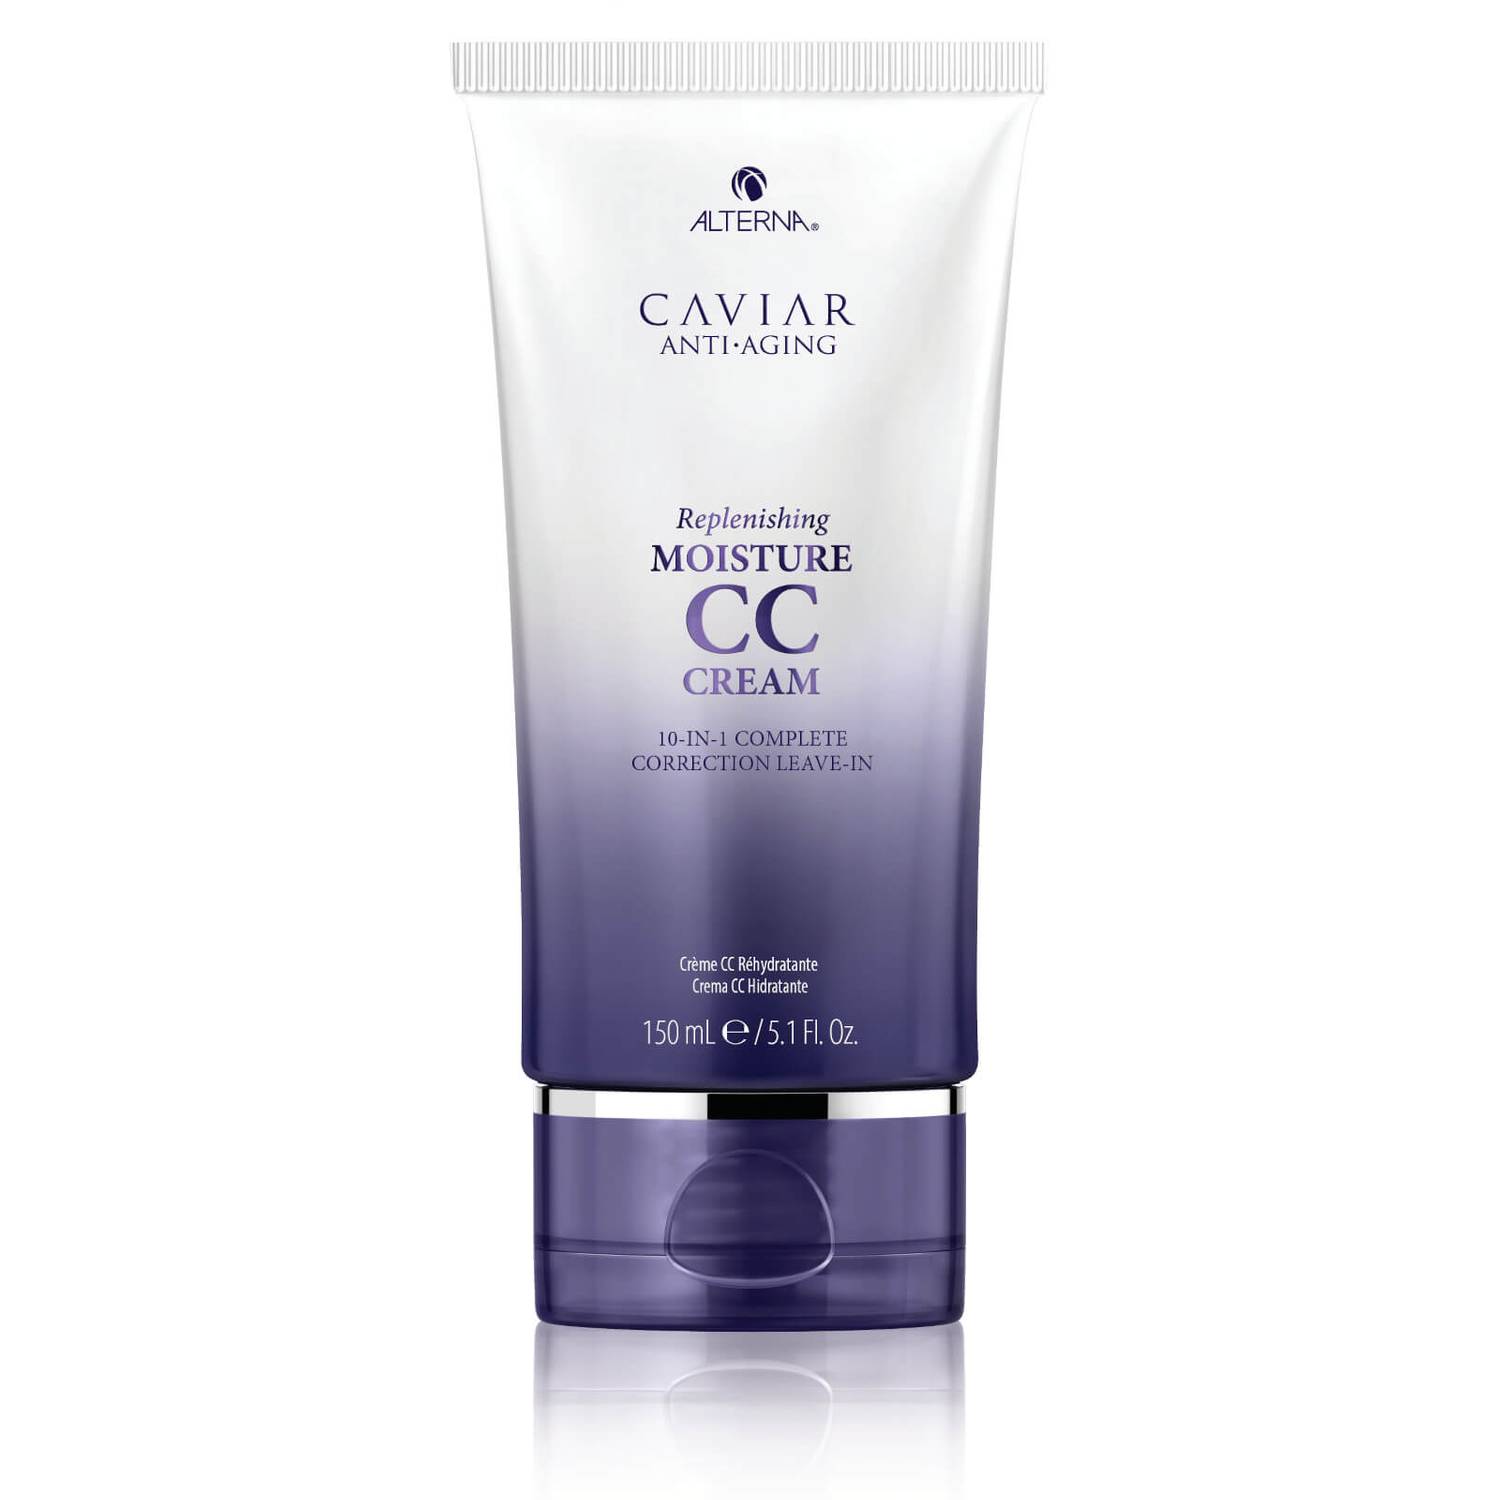 Caviar Anti-Aging Replenishing Moisture CC Cream 150ml